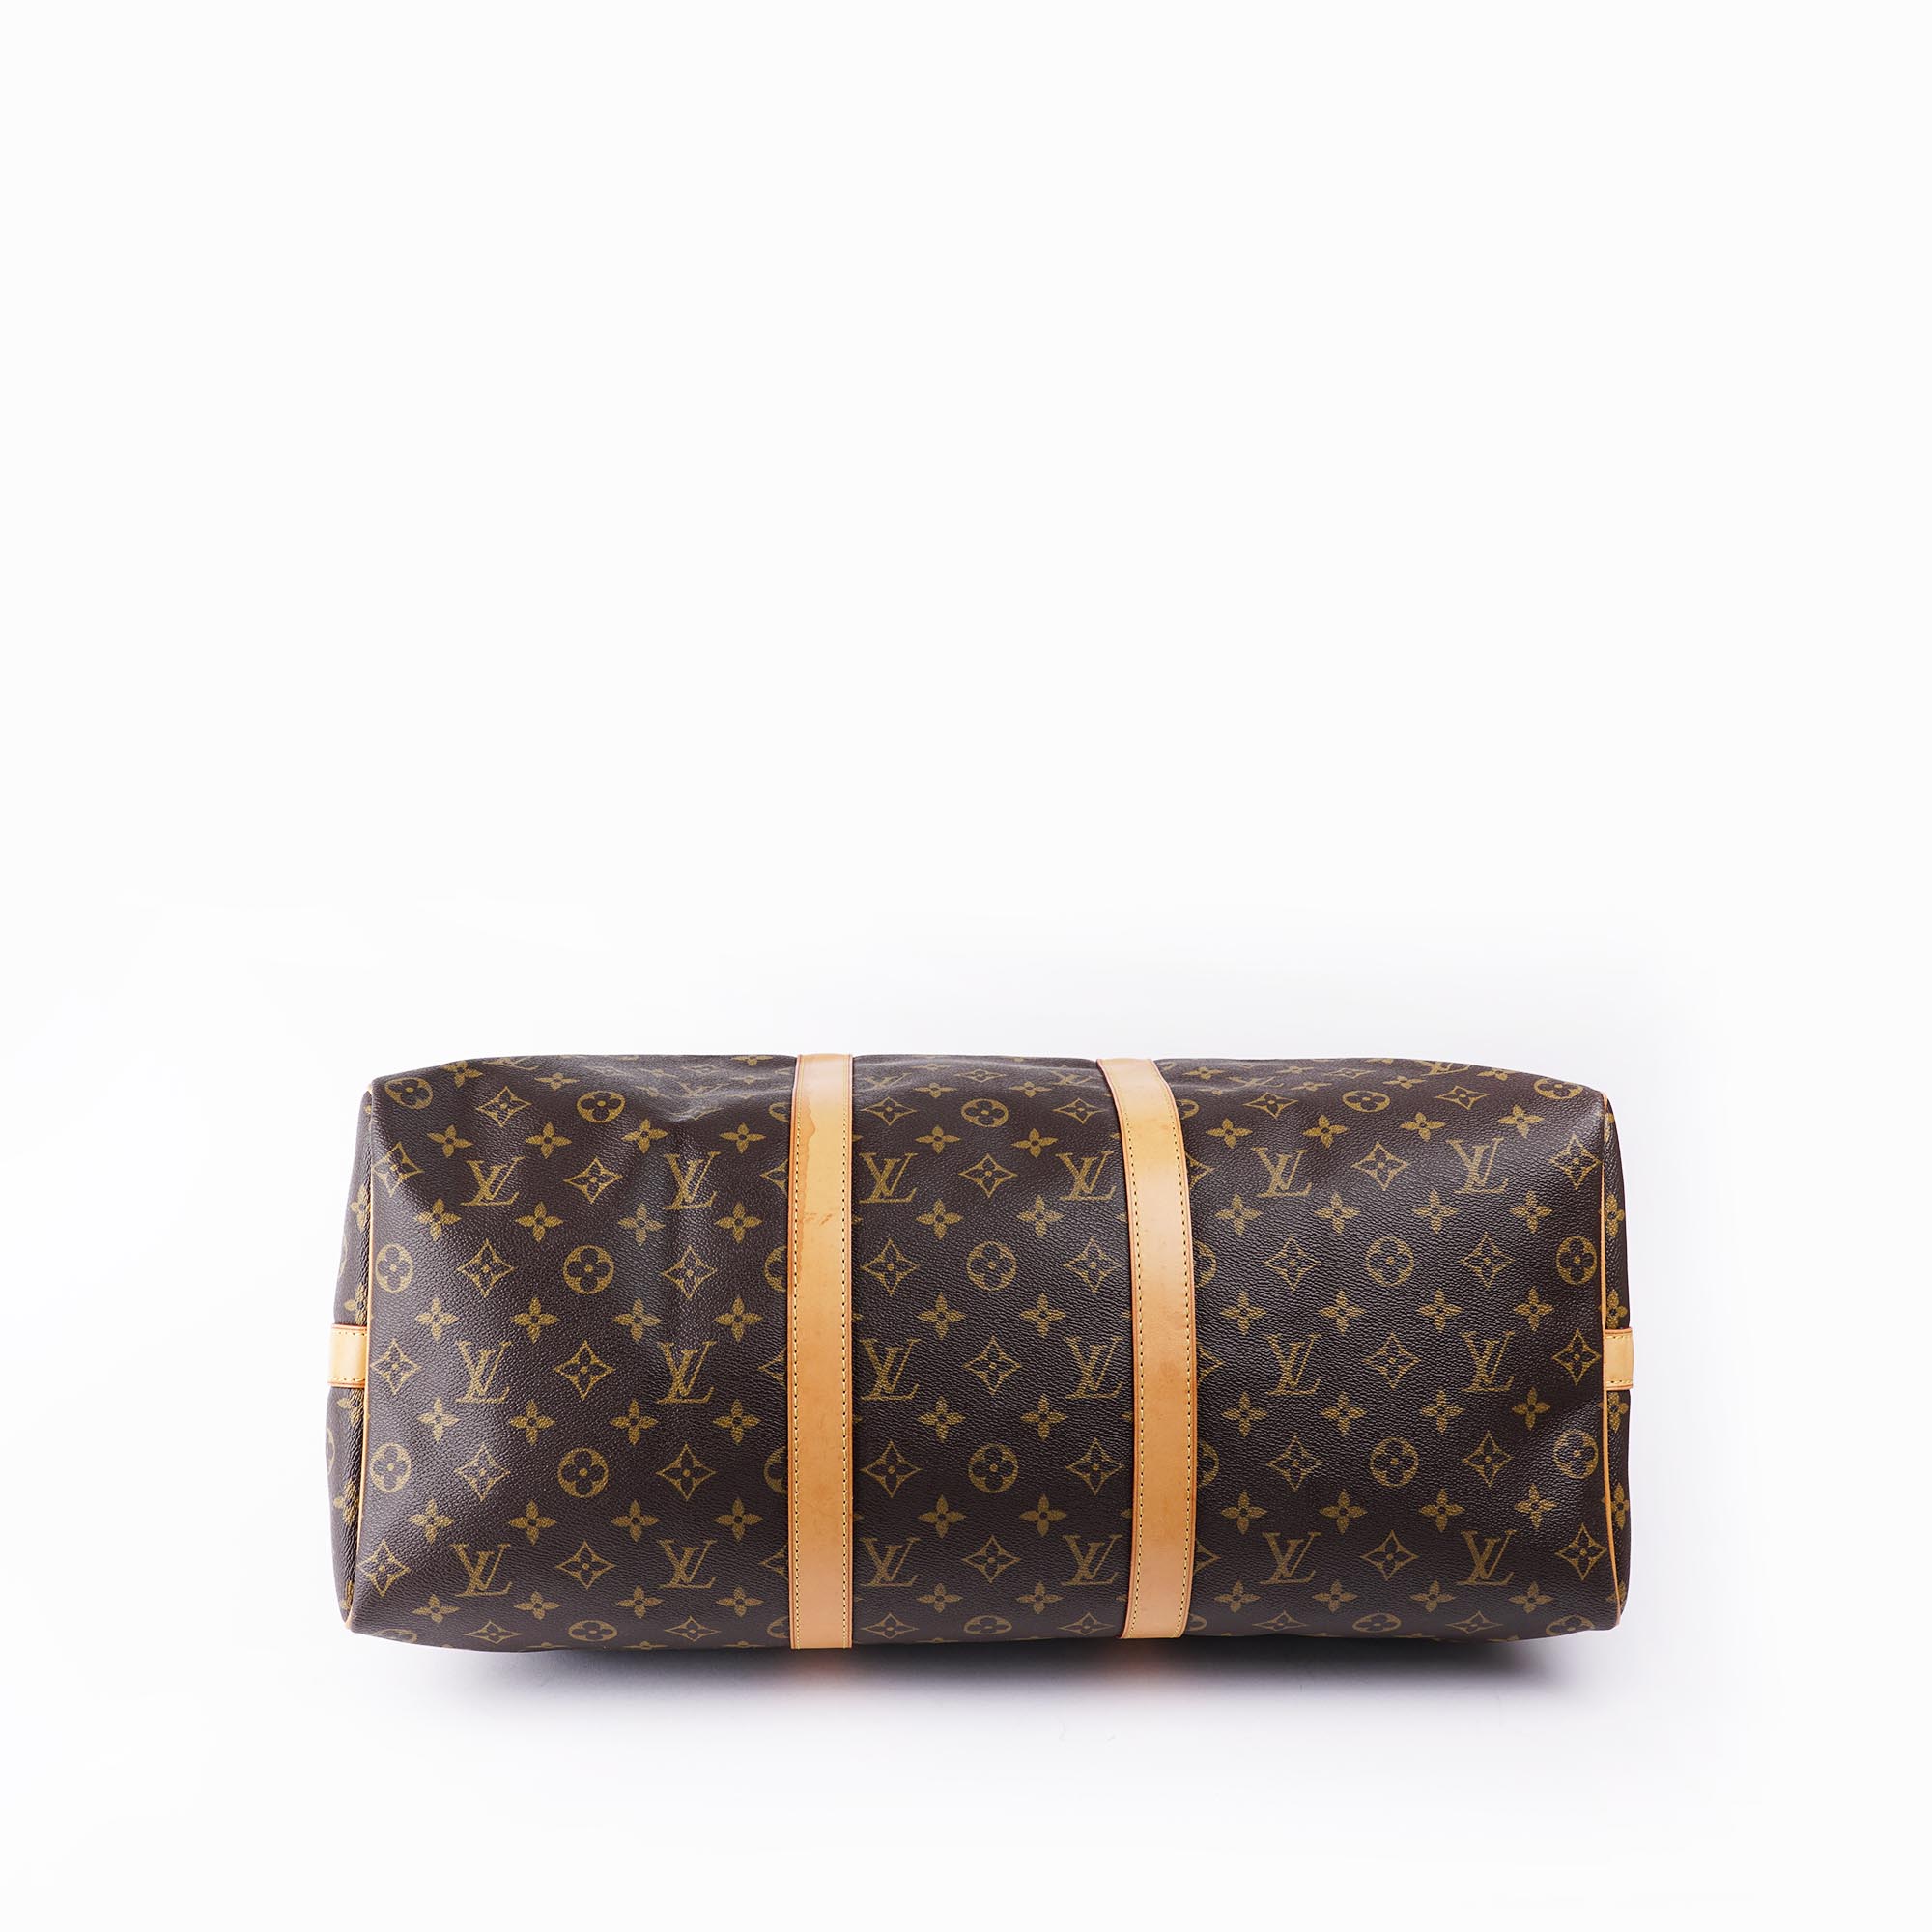 Keepall 50 Bandoulière Bag - LOUIS VUITTON - Affordable Luxury image